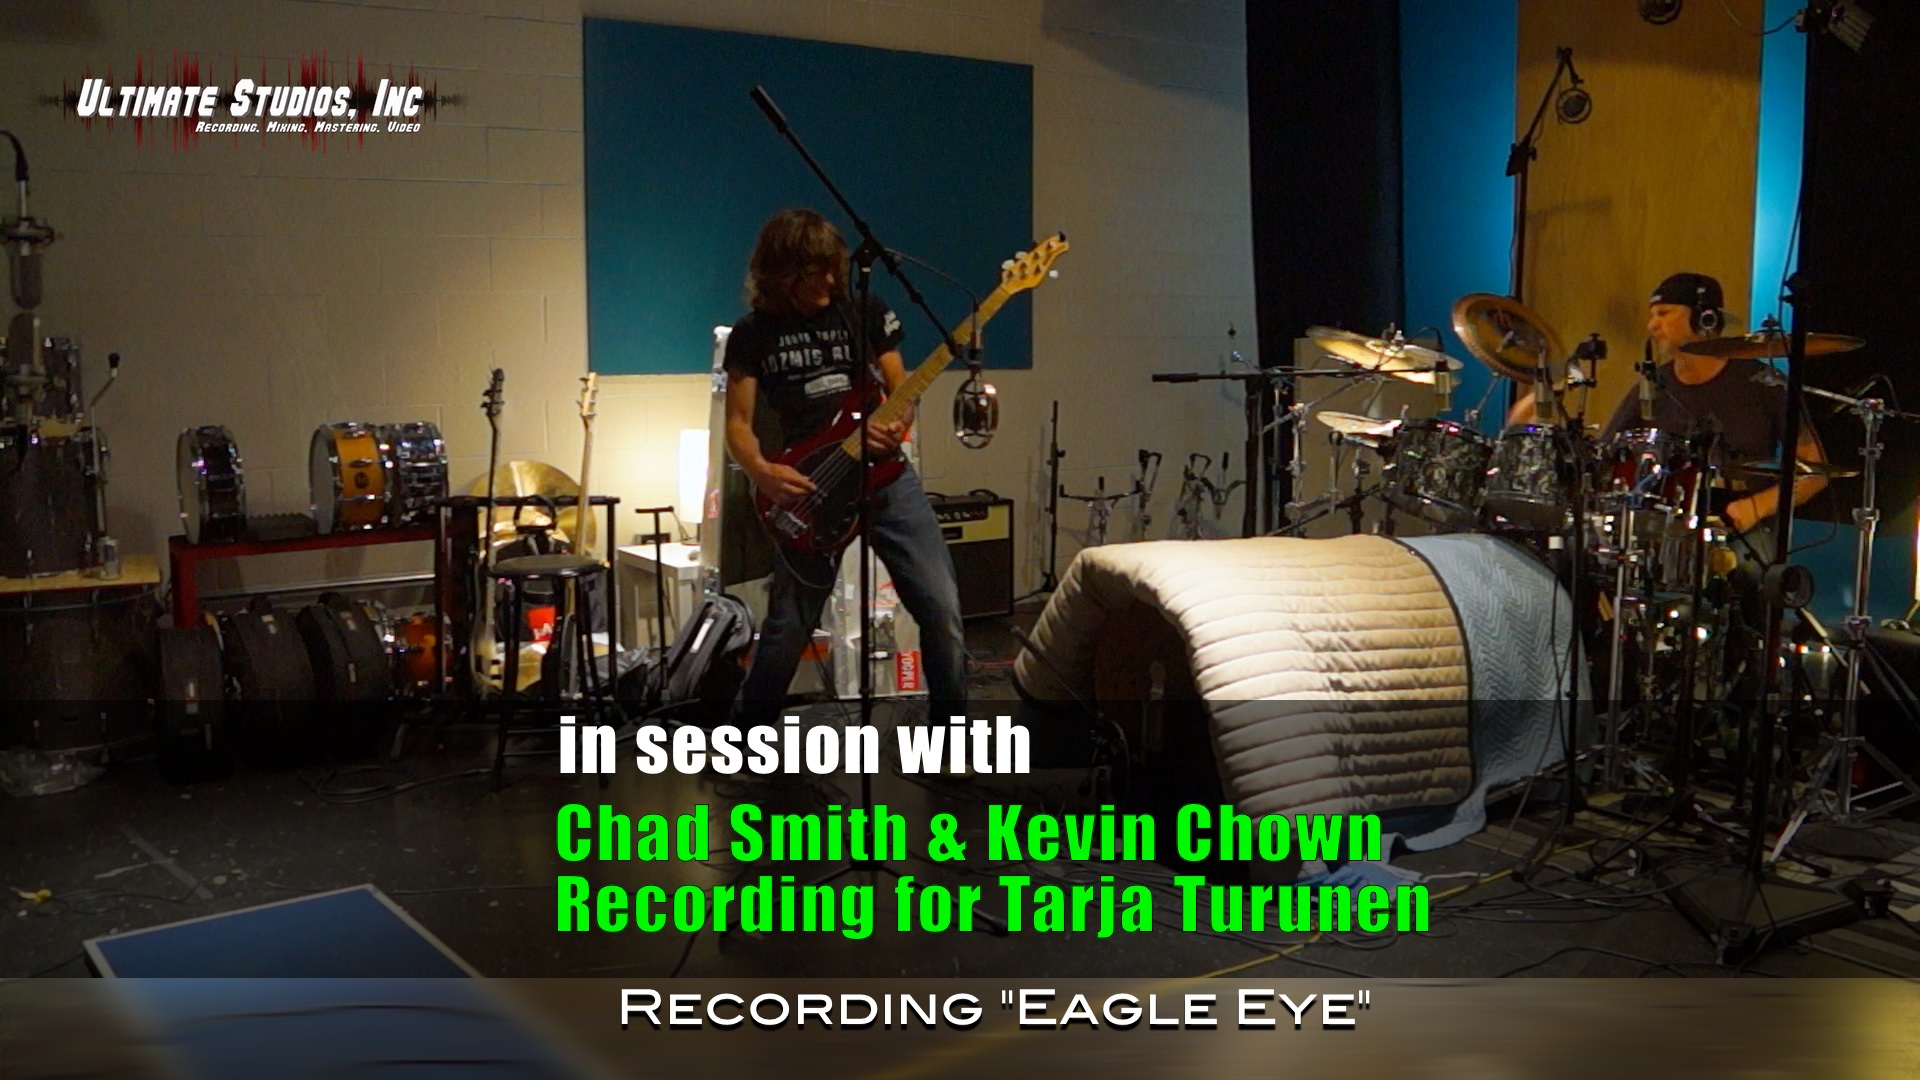 Chad Smith & Kevin Chown recording Eagle Eye for Tarja Turunen